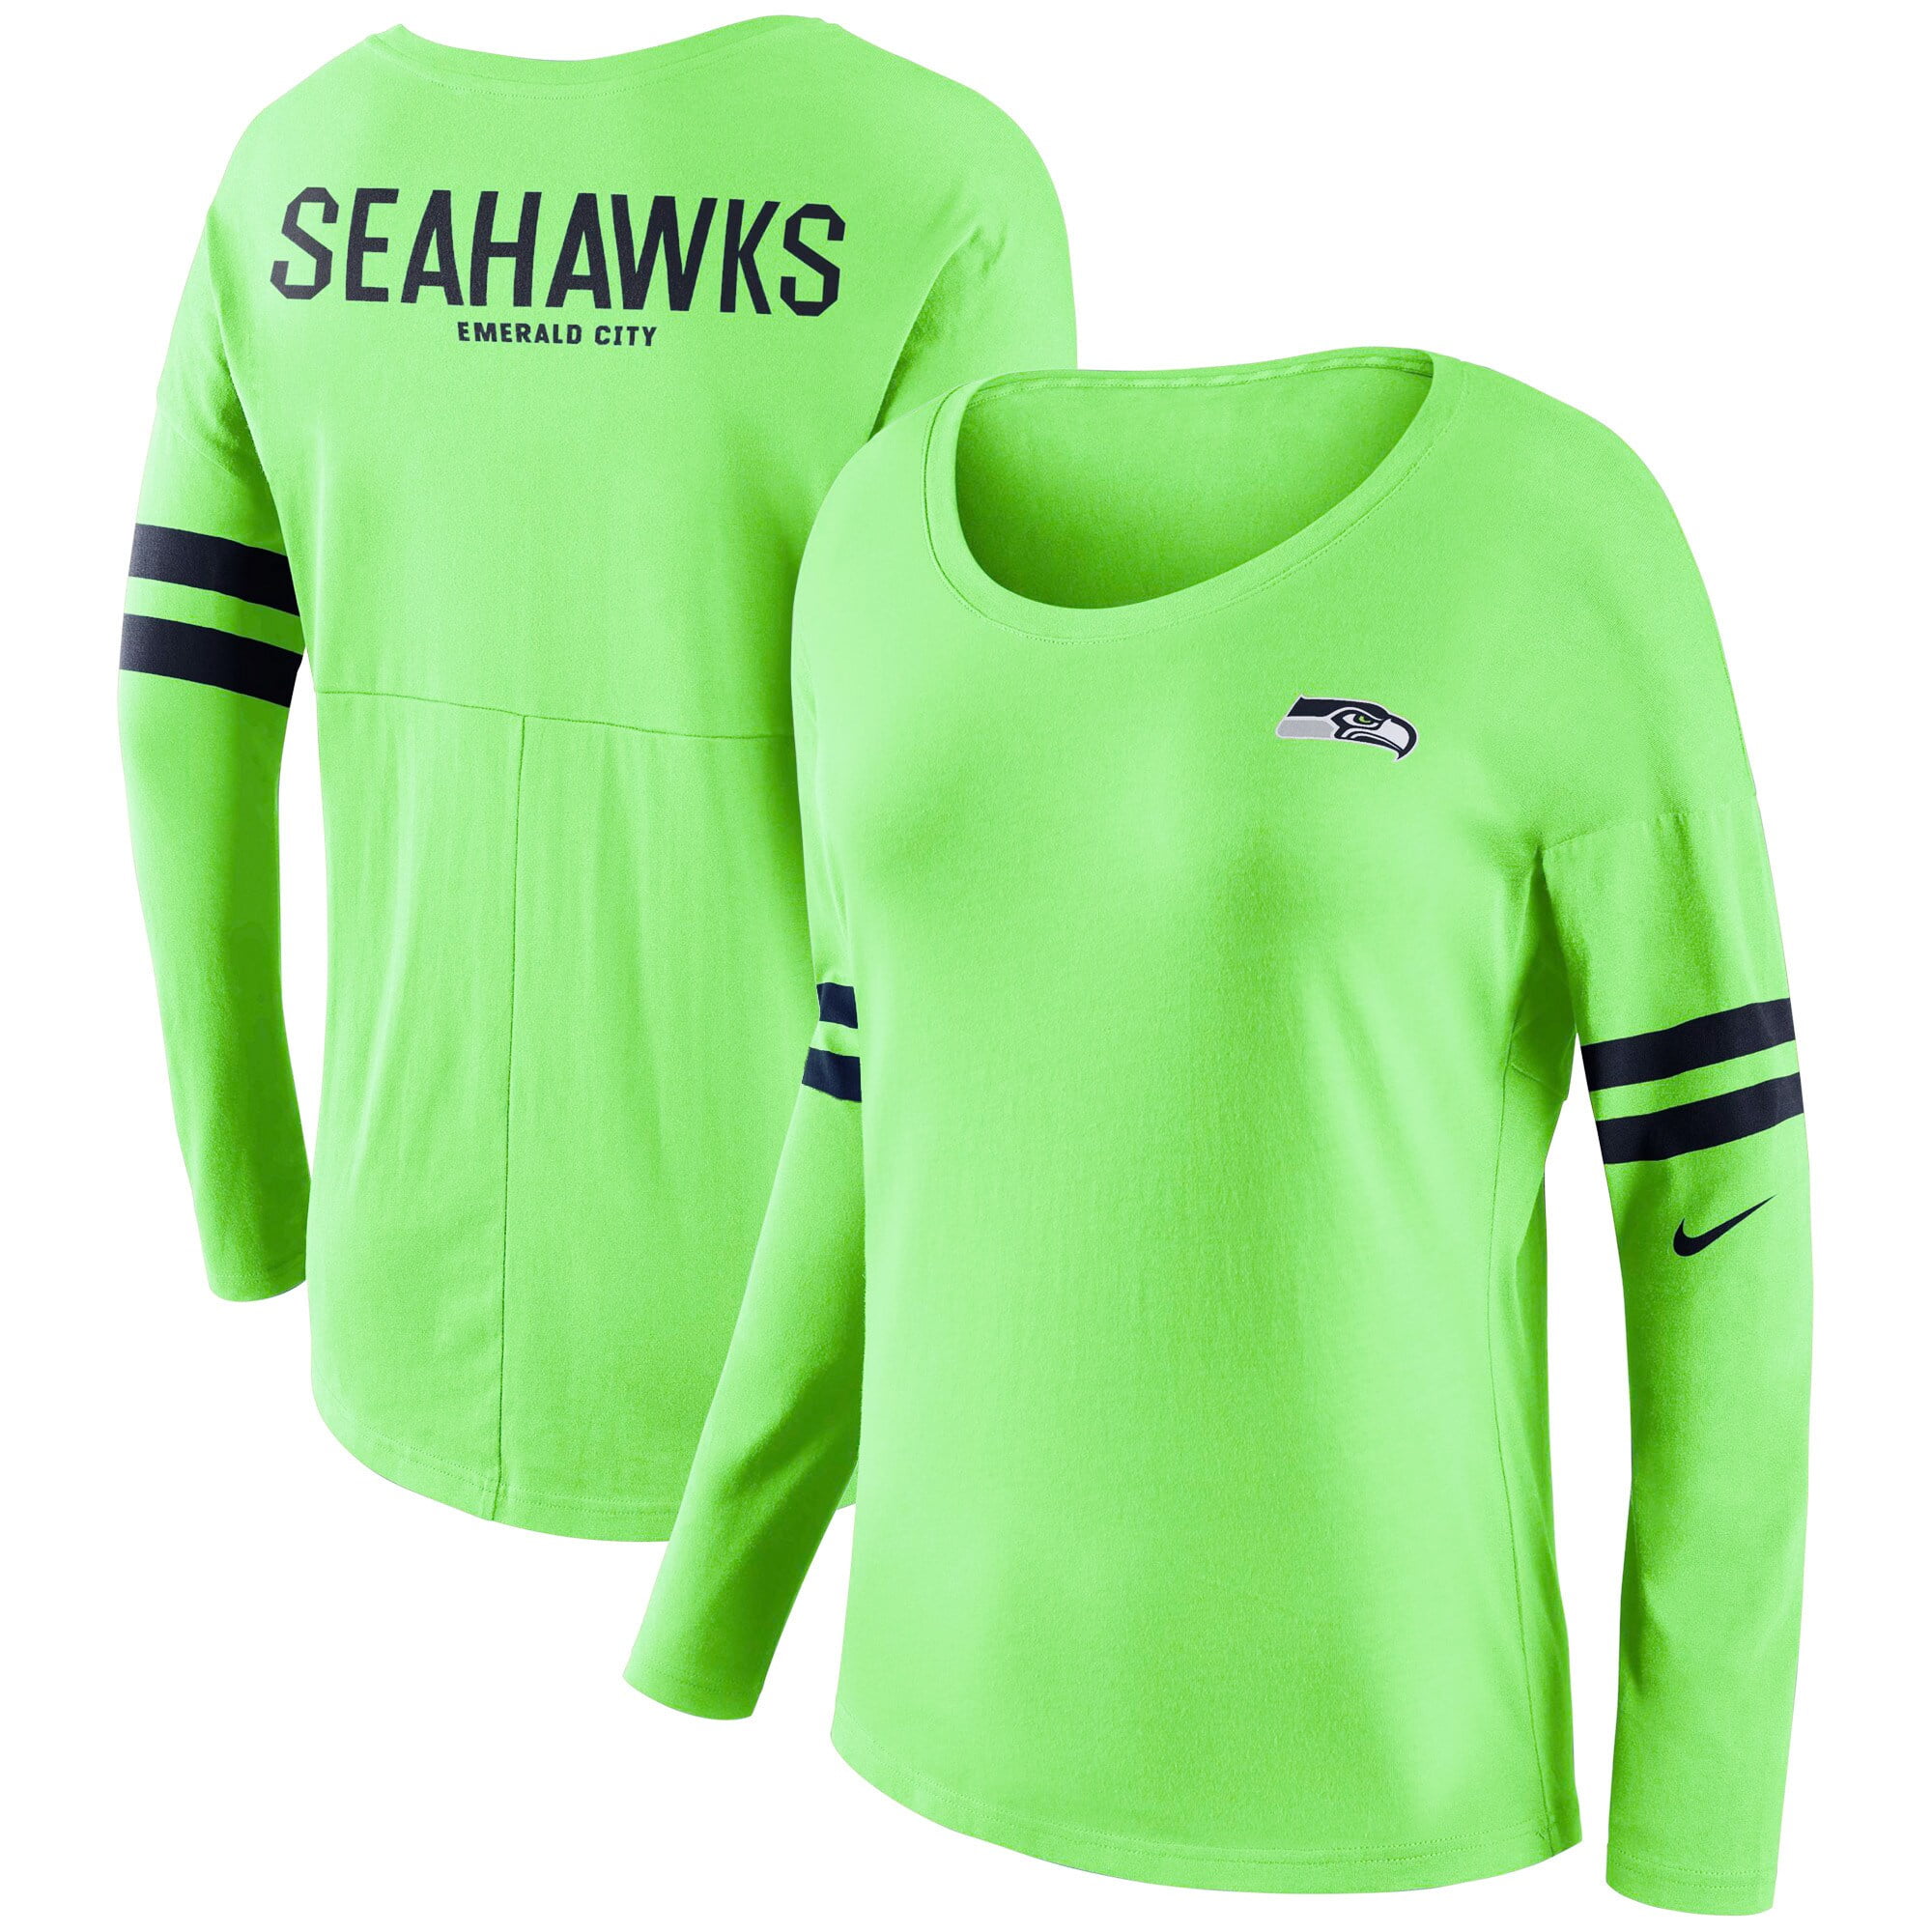 seahawks lime green long sleeve shirt